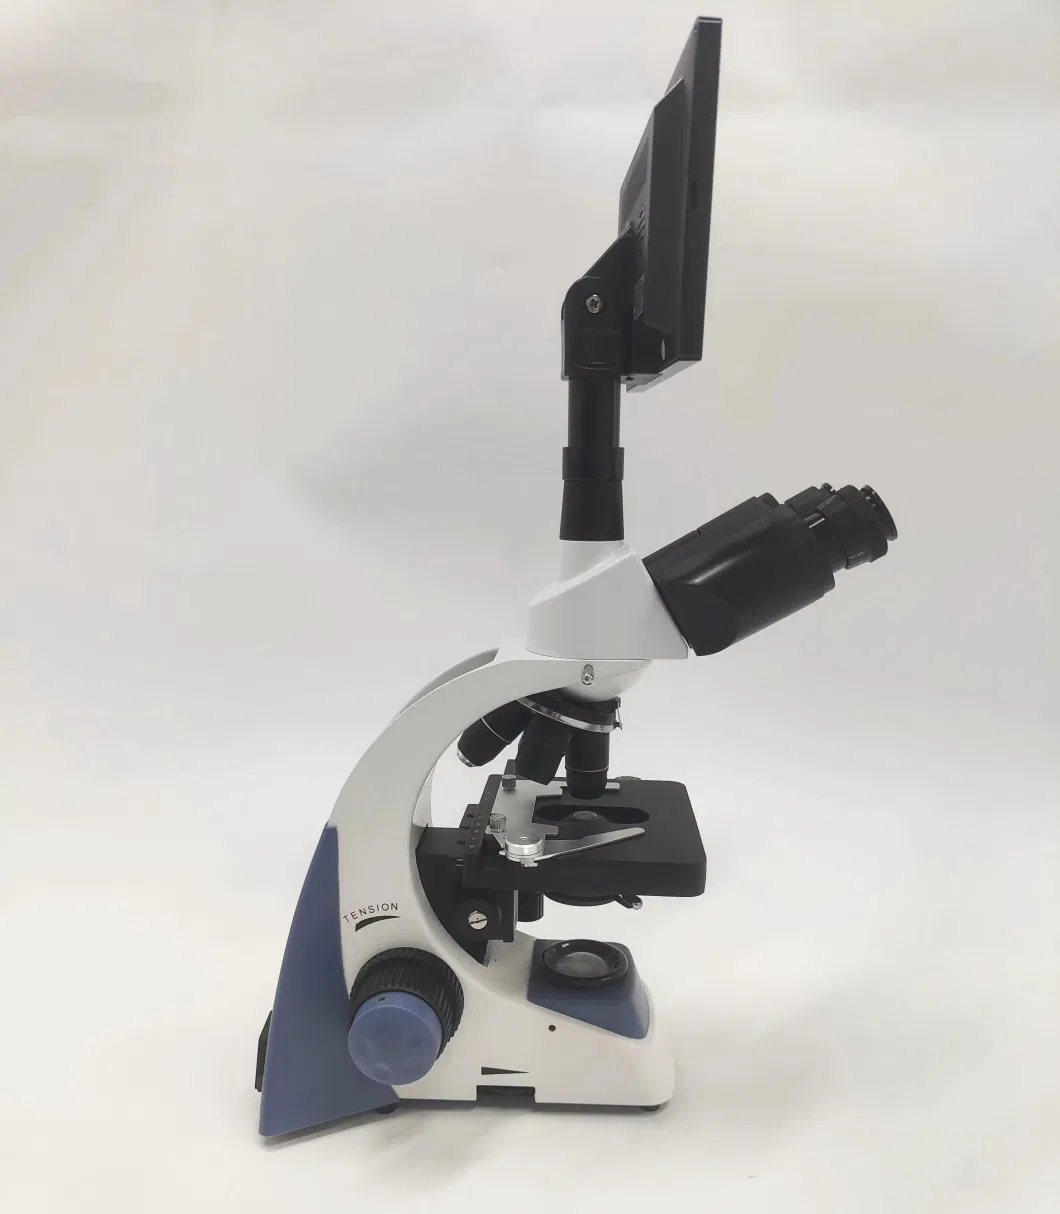 Digital Vision Xsp-500sm Trinocular Microscope